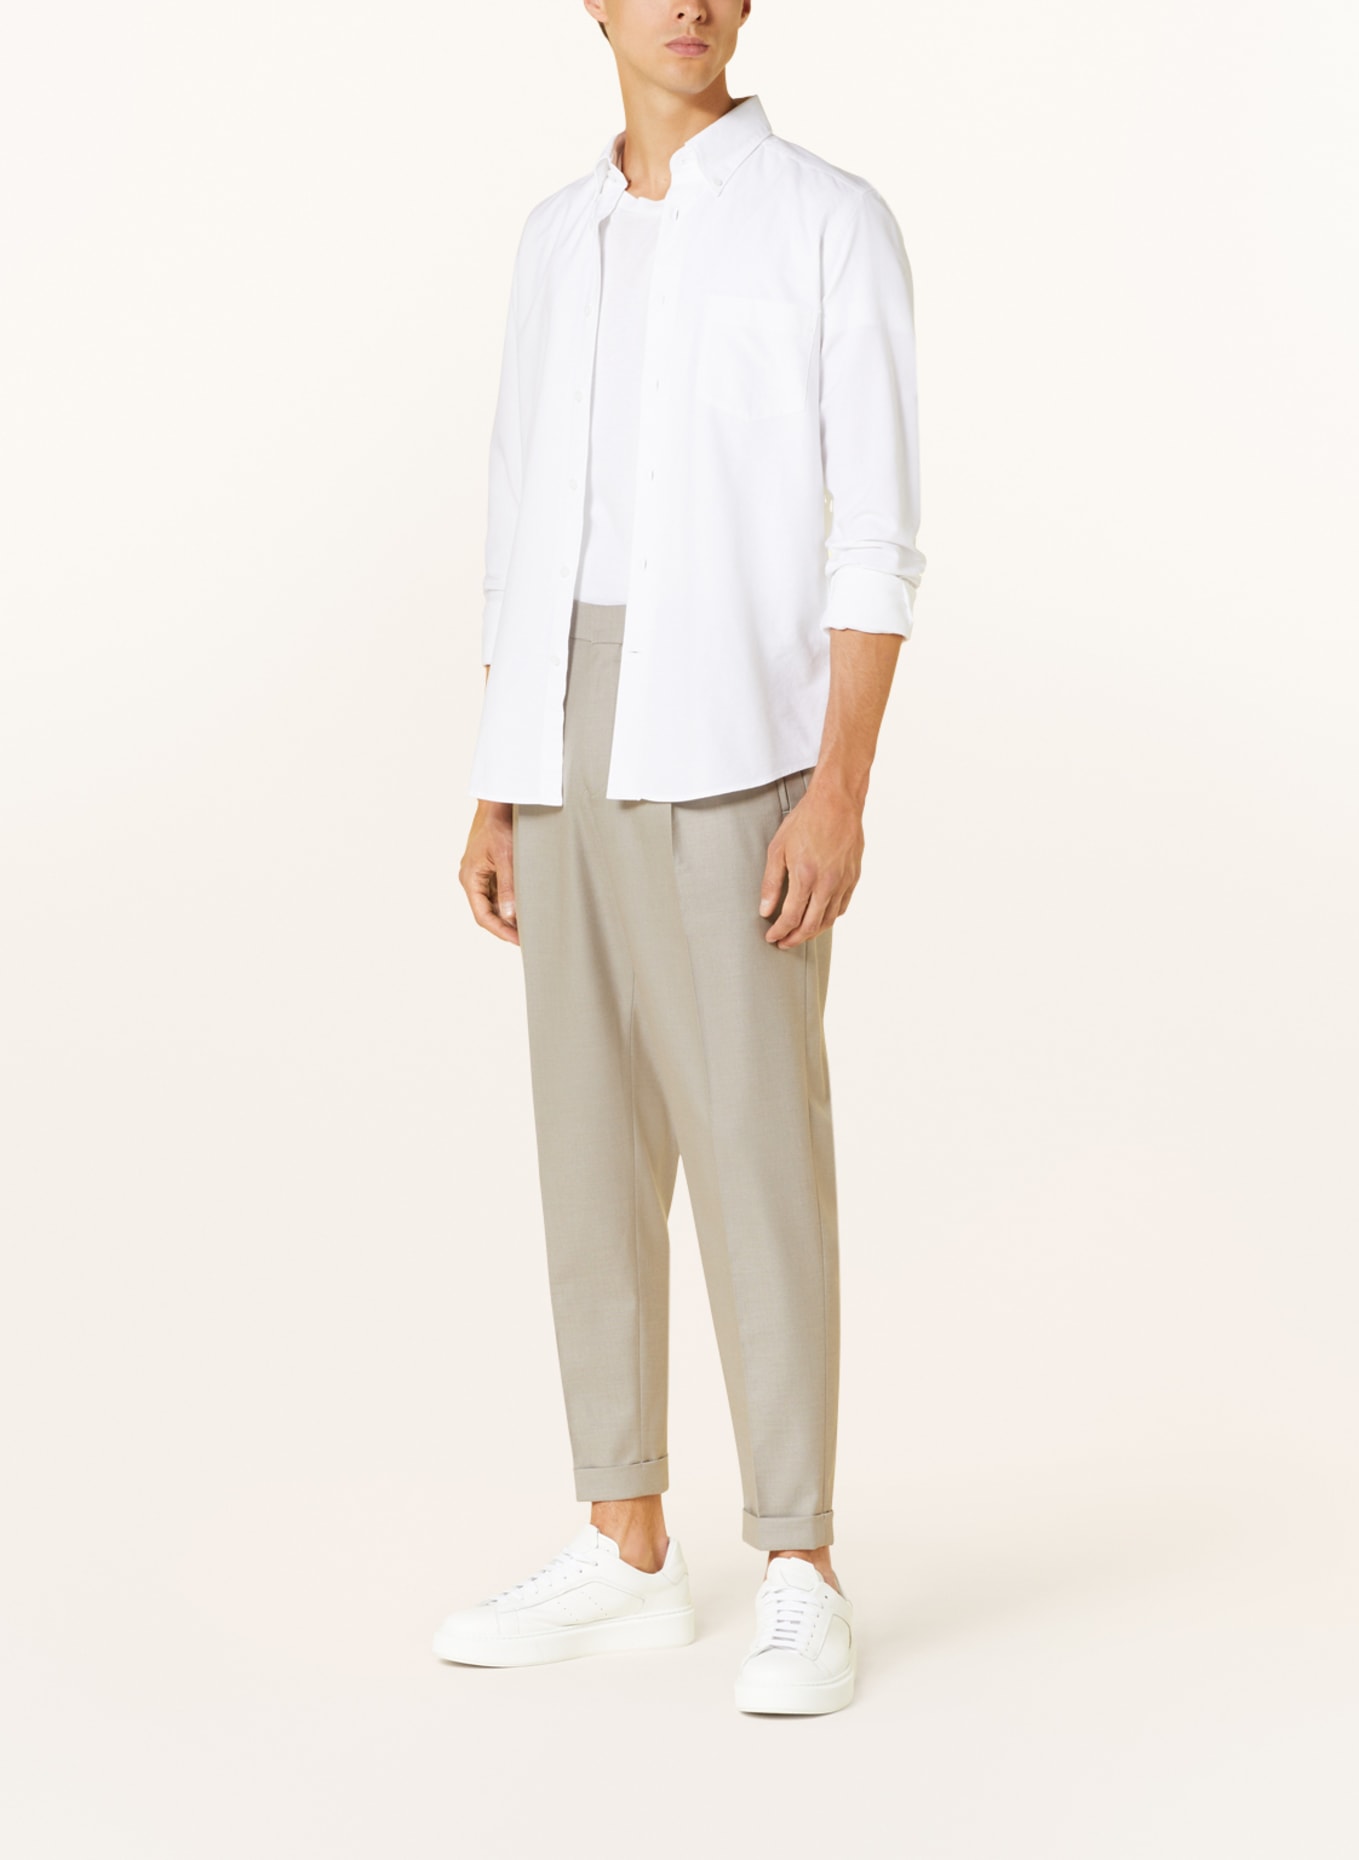 REISS Oxfordhemd GREENWICH Slim Fit, Farbe: WEISS (Bild 2)